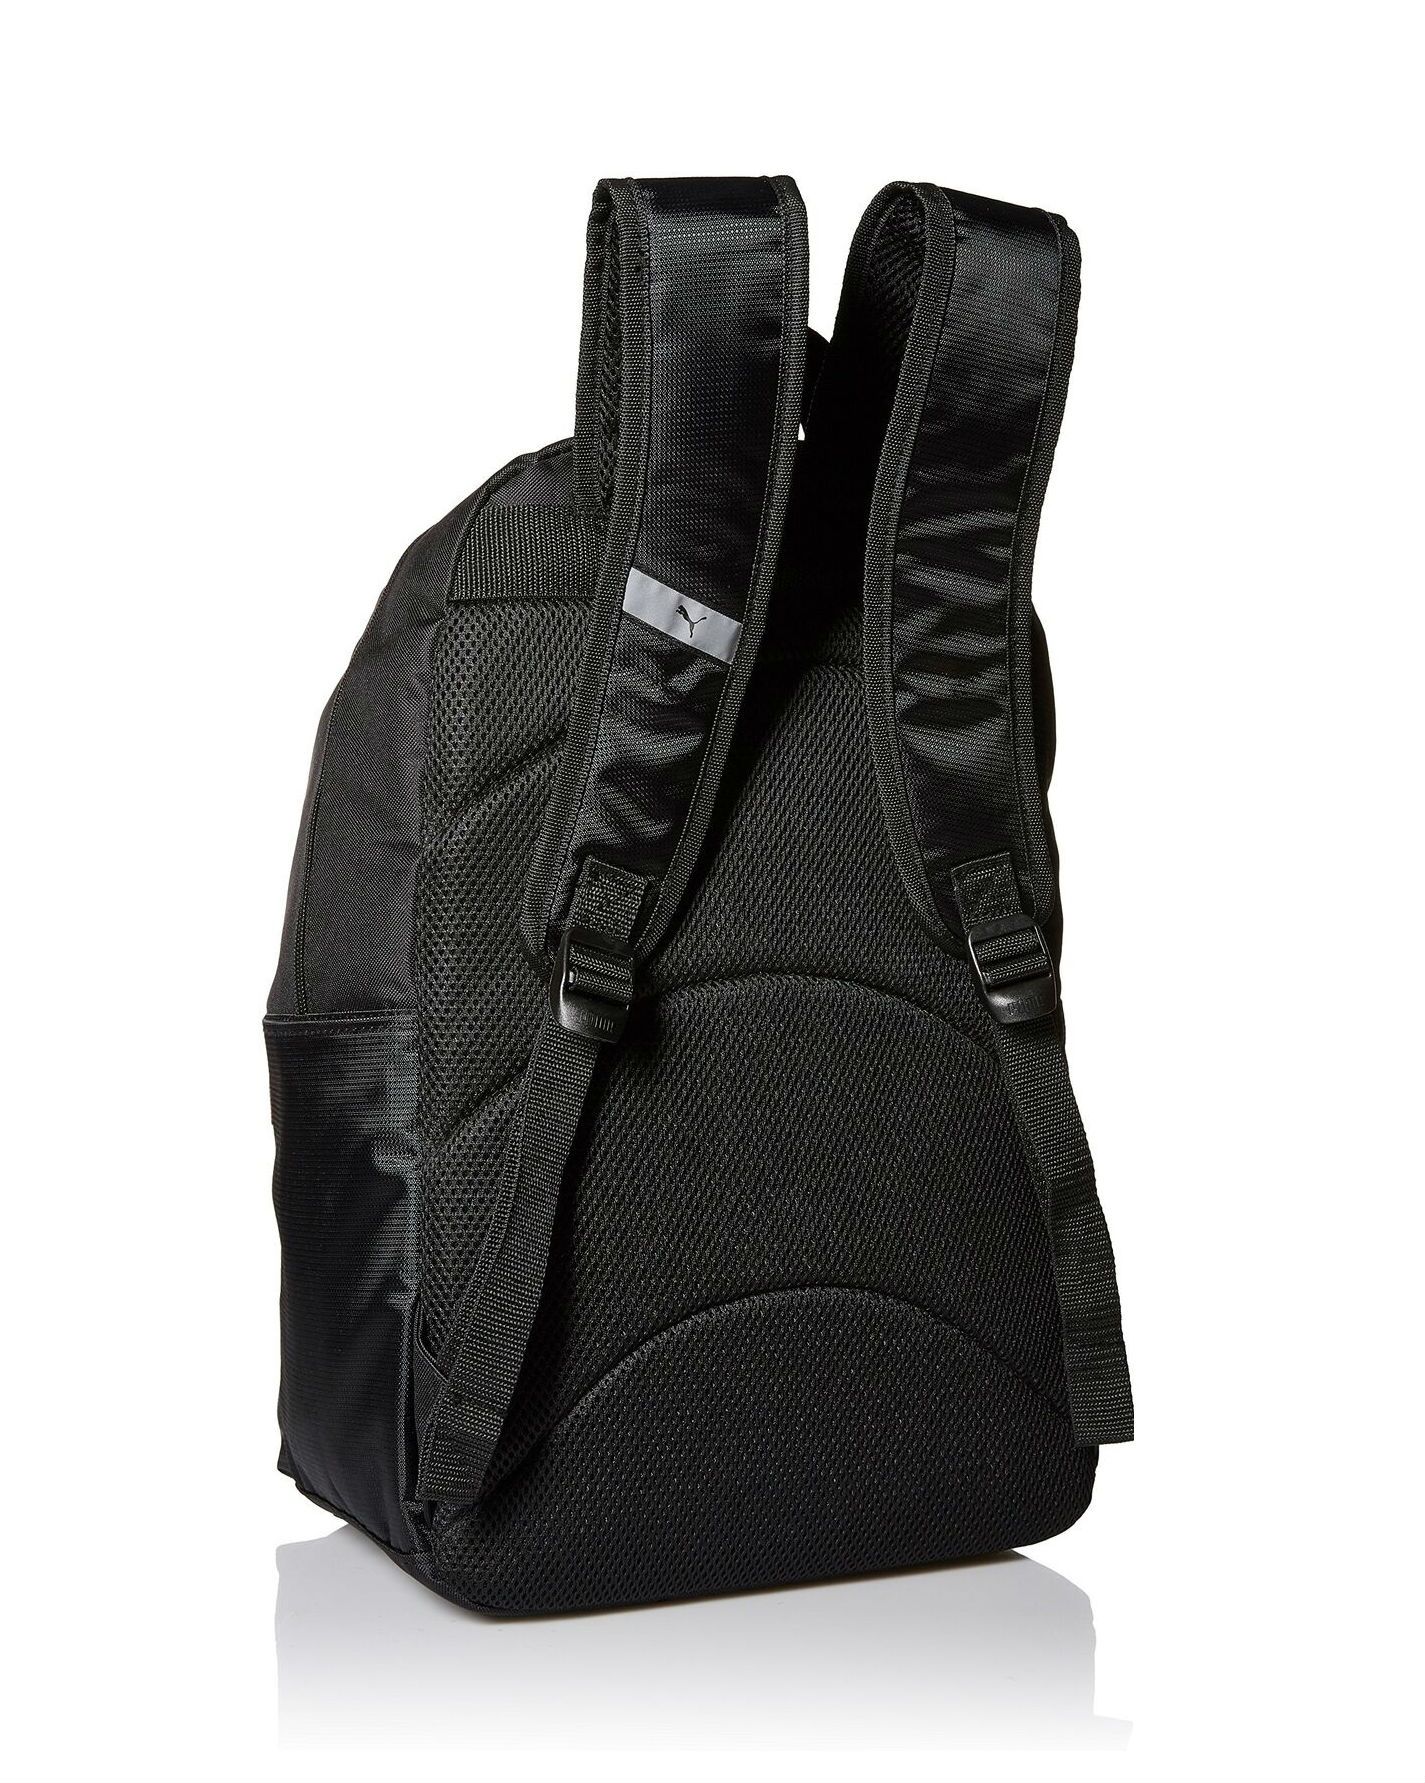 puma evercat lifeline backpack